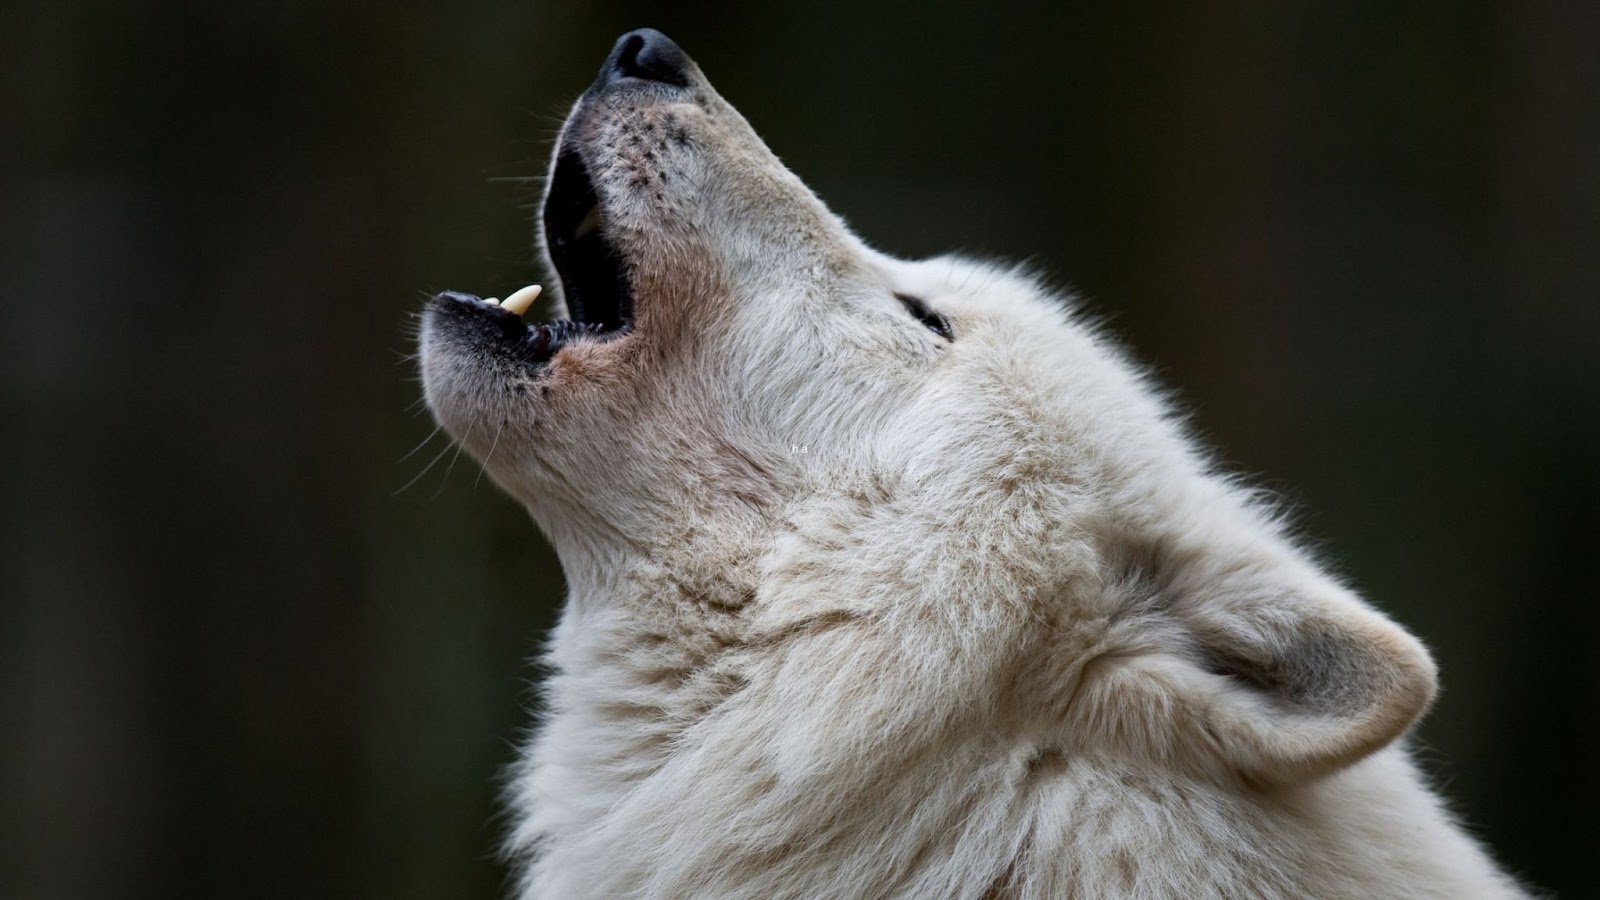 howling white Northern inuit dog on black back ground